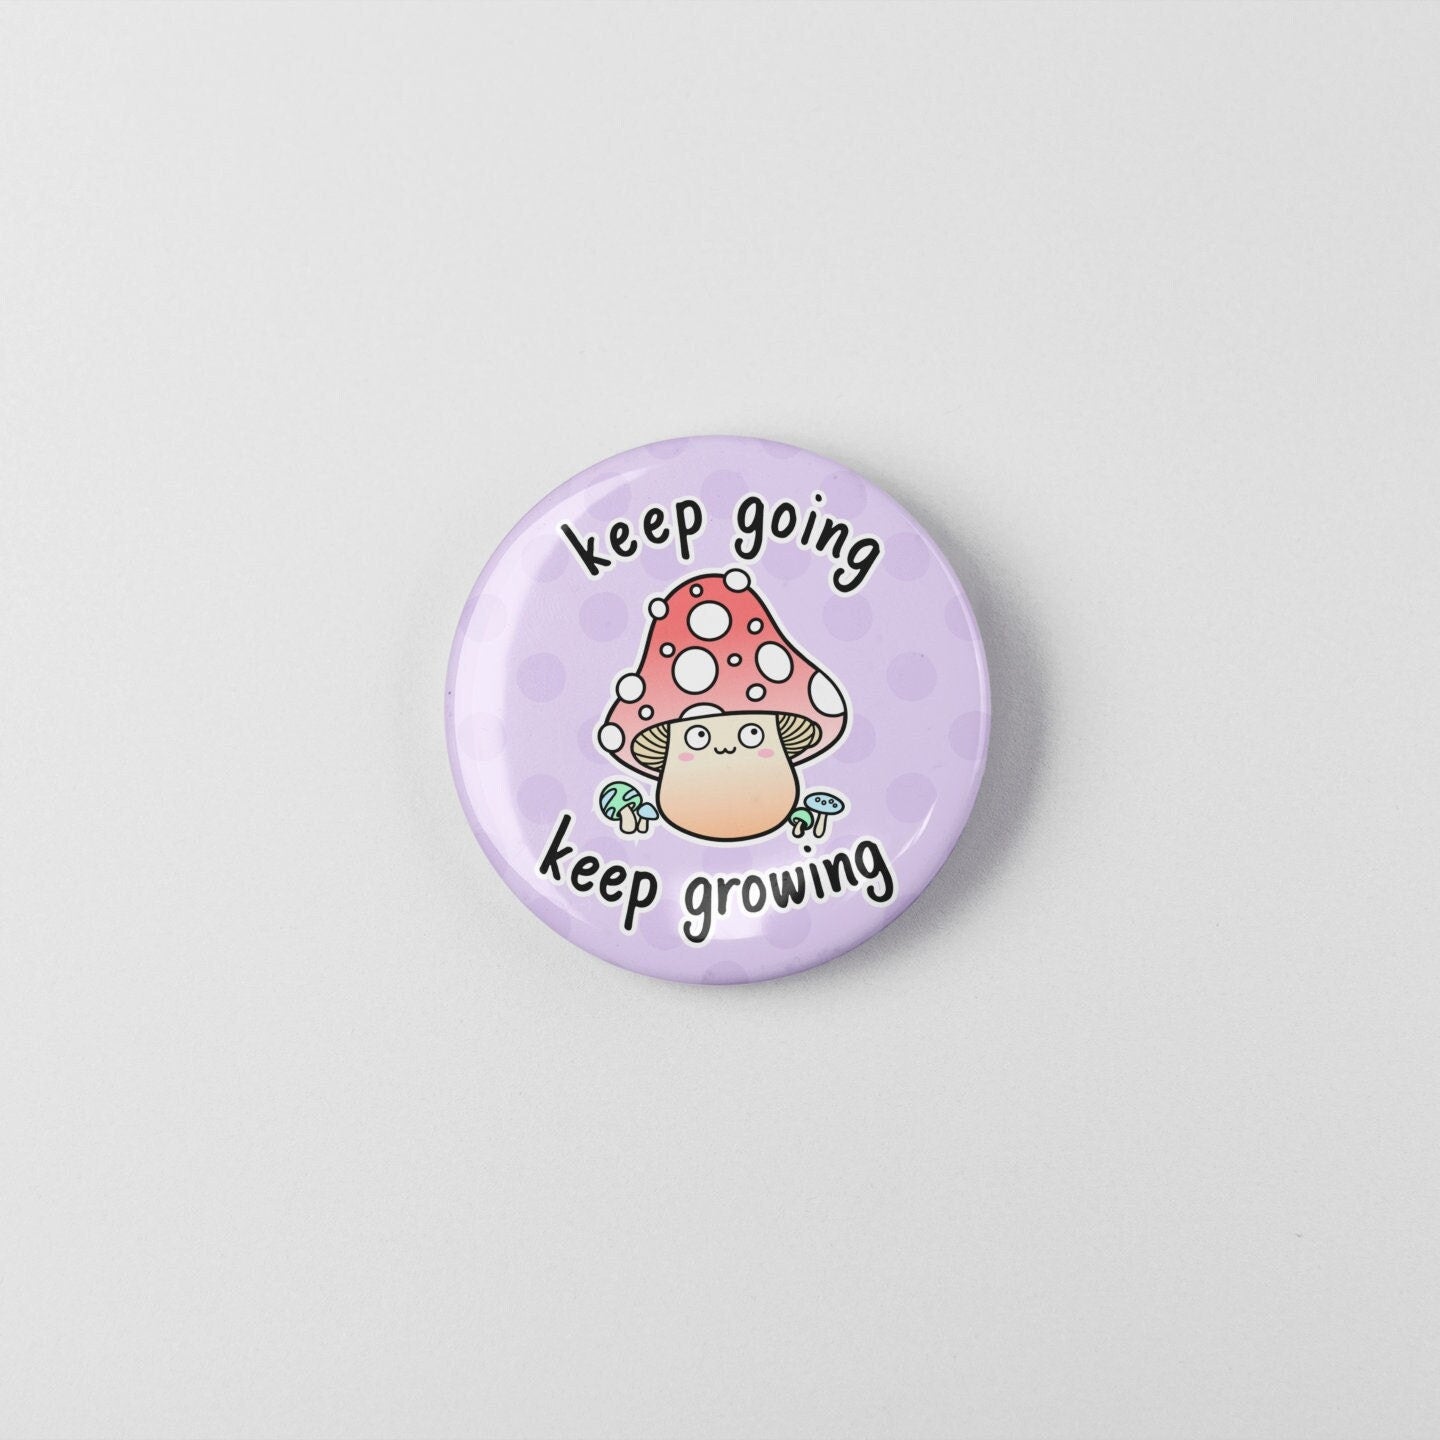 Keep Going Keep Growing - Badge Pin | Cute Pins, Mushroom Pin, Motivational Badges